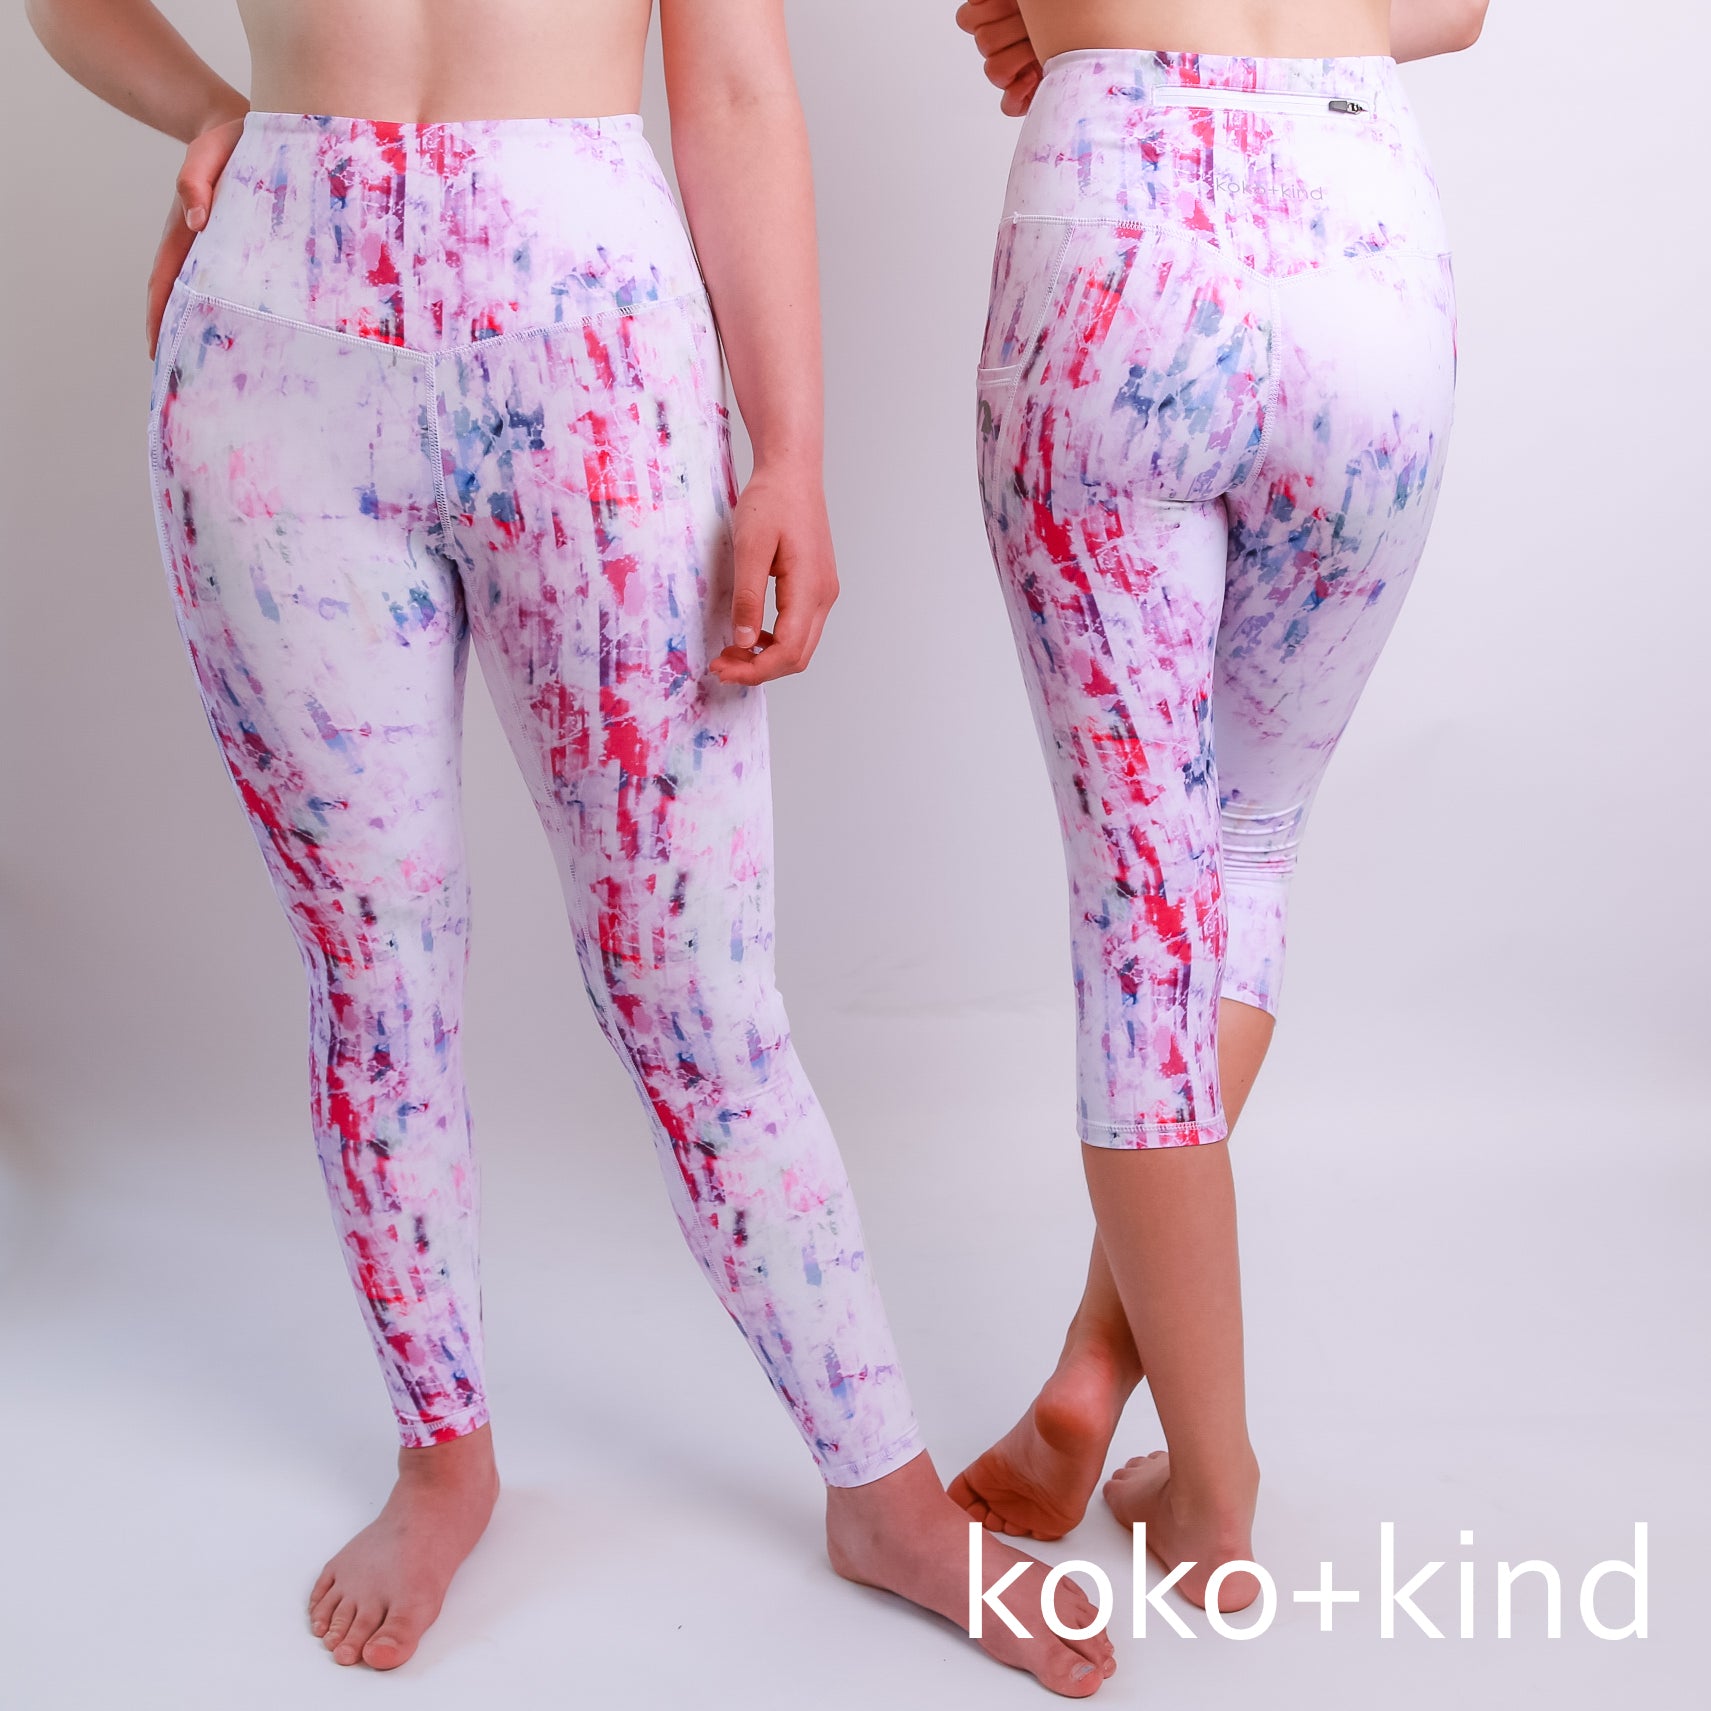 koko and kind Glitch LEGGINGS - pink abstract art